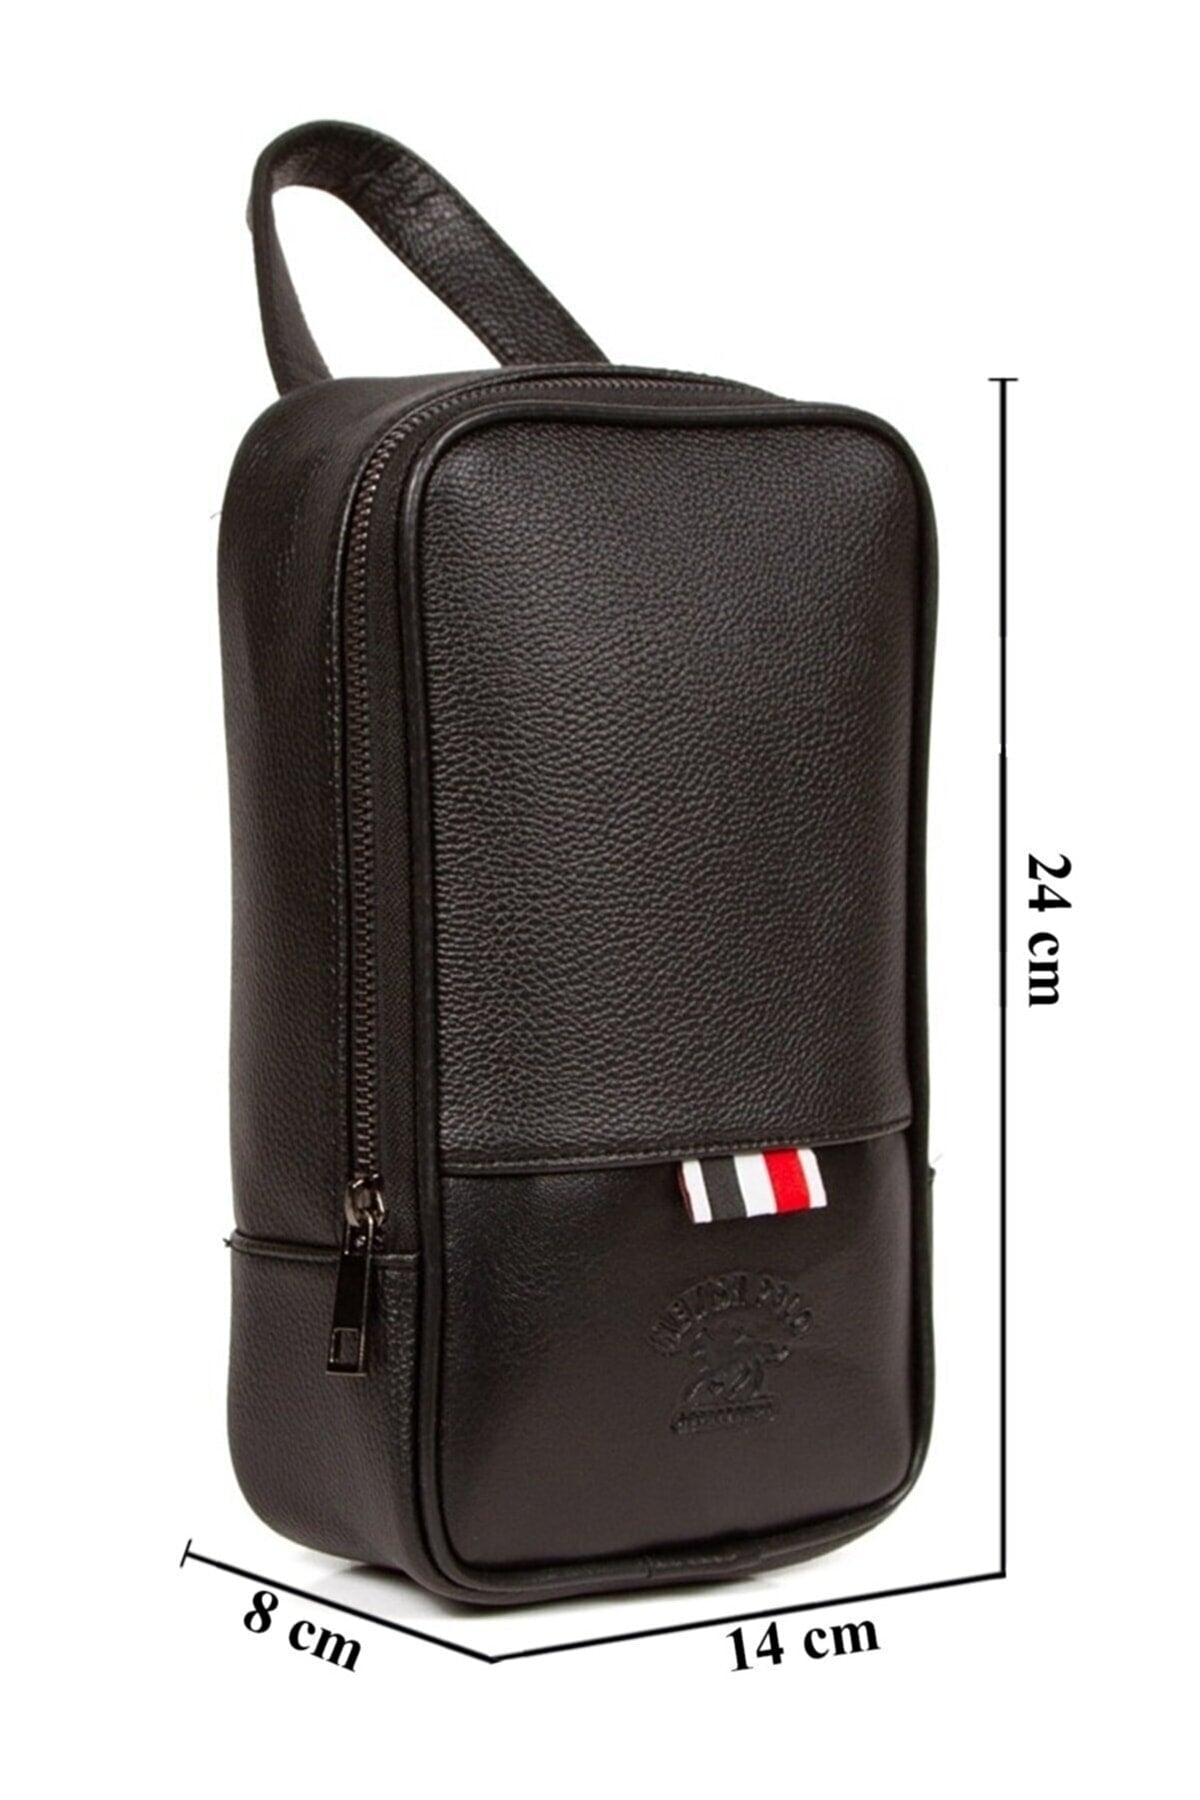 Newish Polo Premium Leather Black Color Shaving, Makeup, Travel Portfolio Cosmetic Clutch Hand Bag